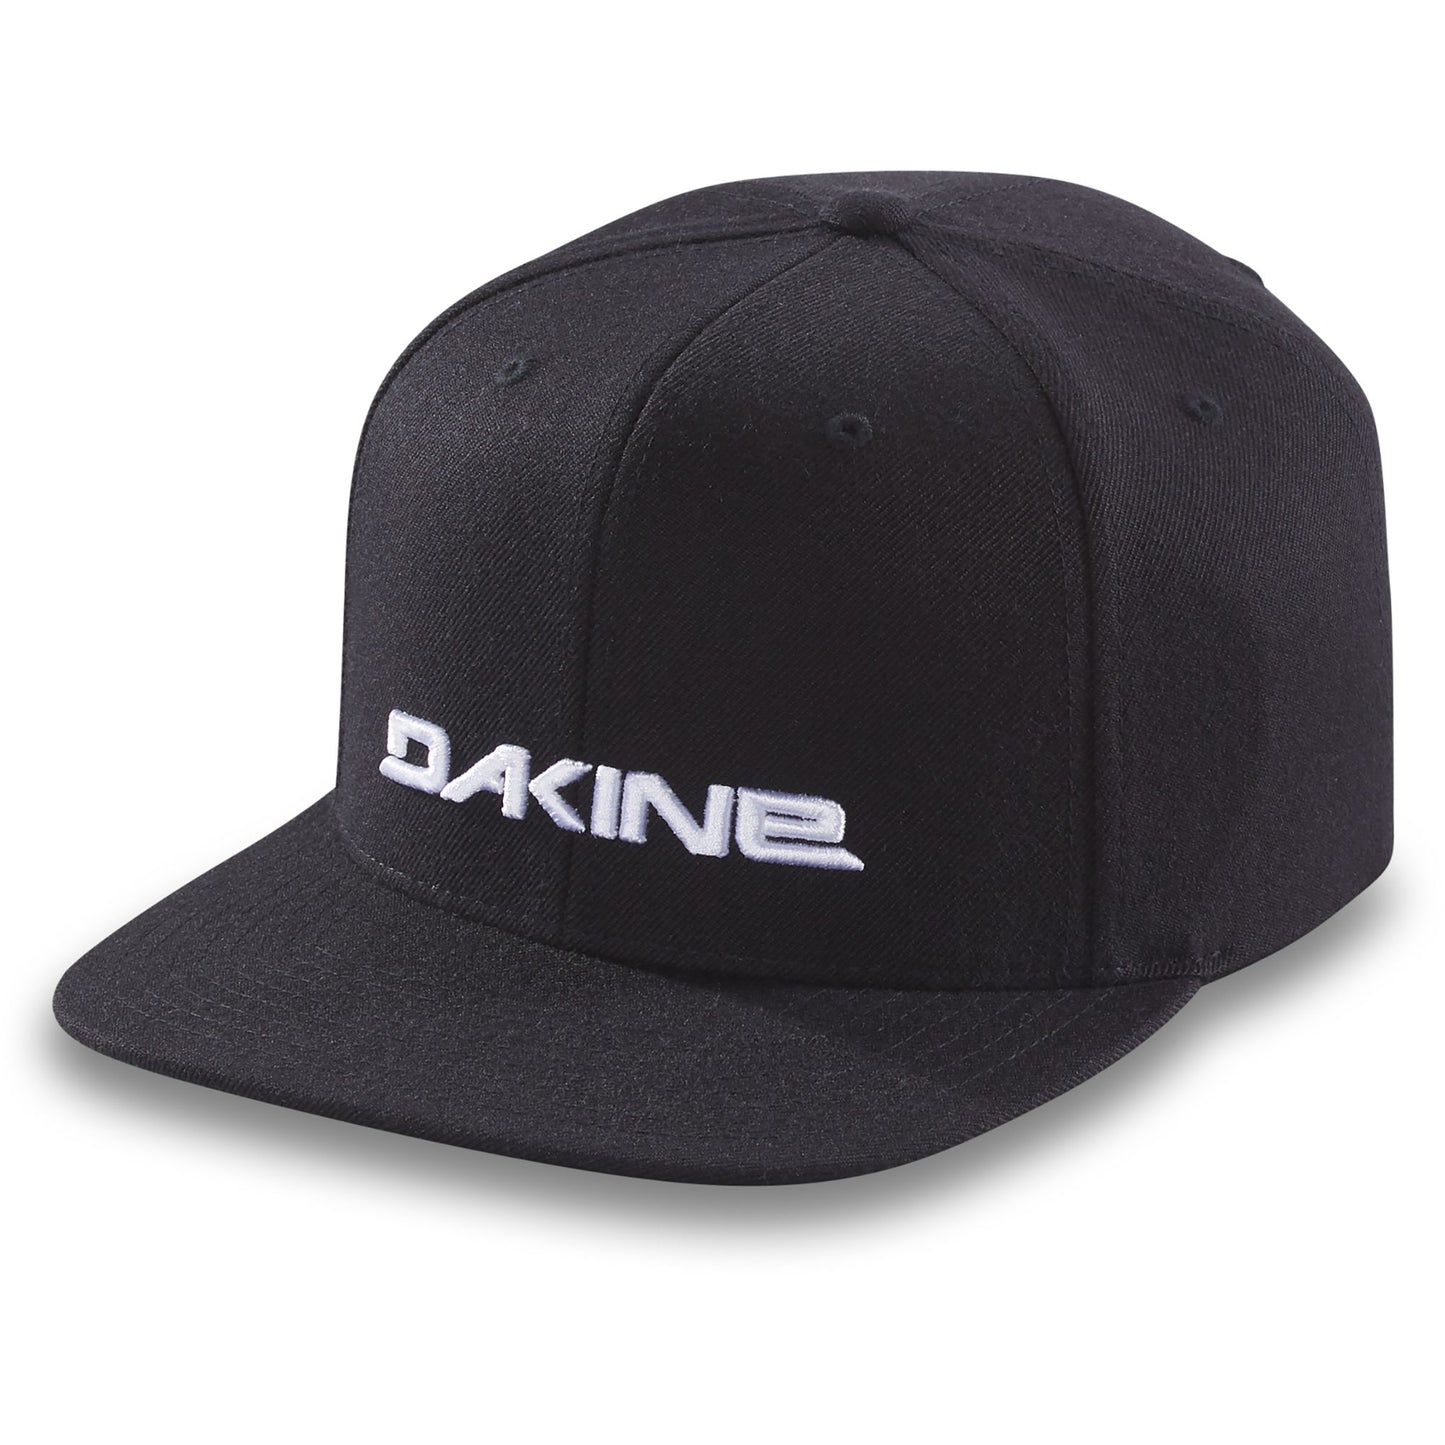 Dakine Classic Snapback Hat Black OS Hats